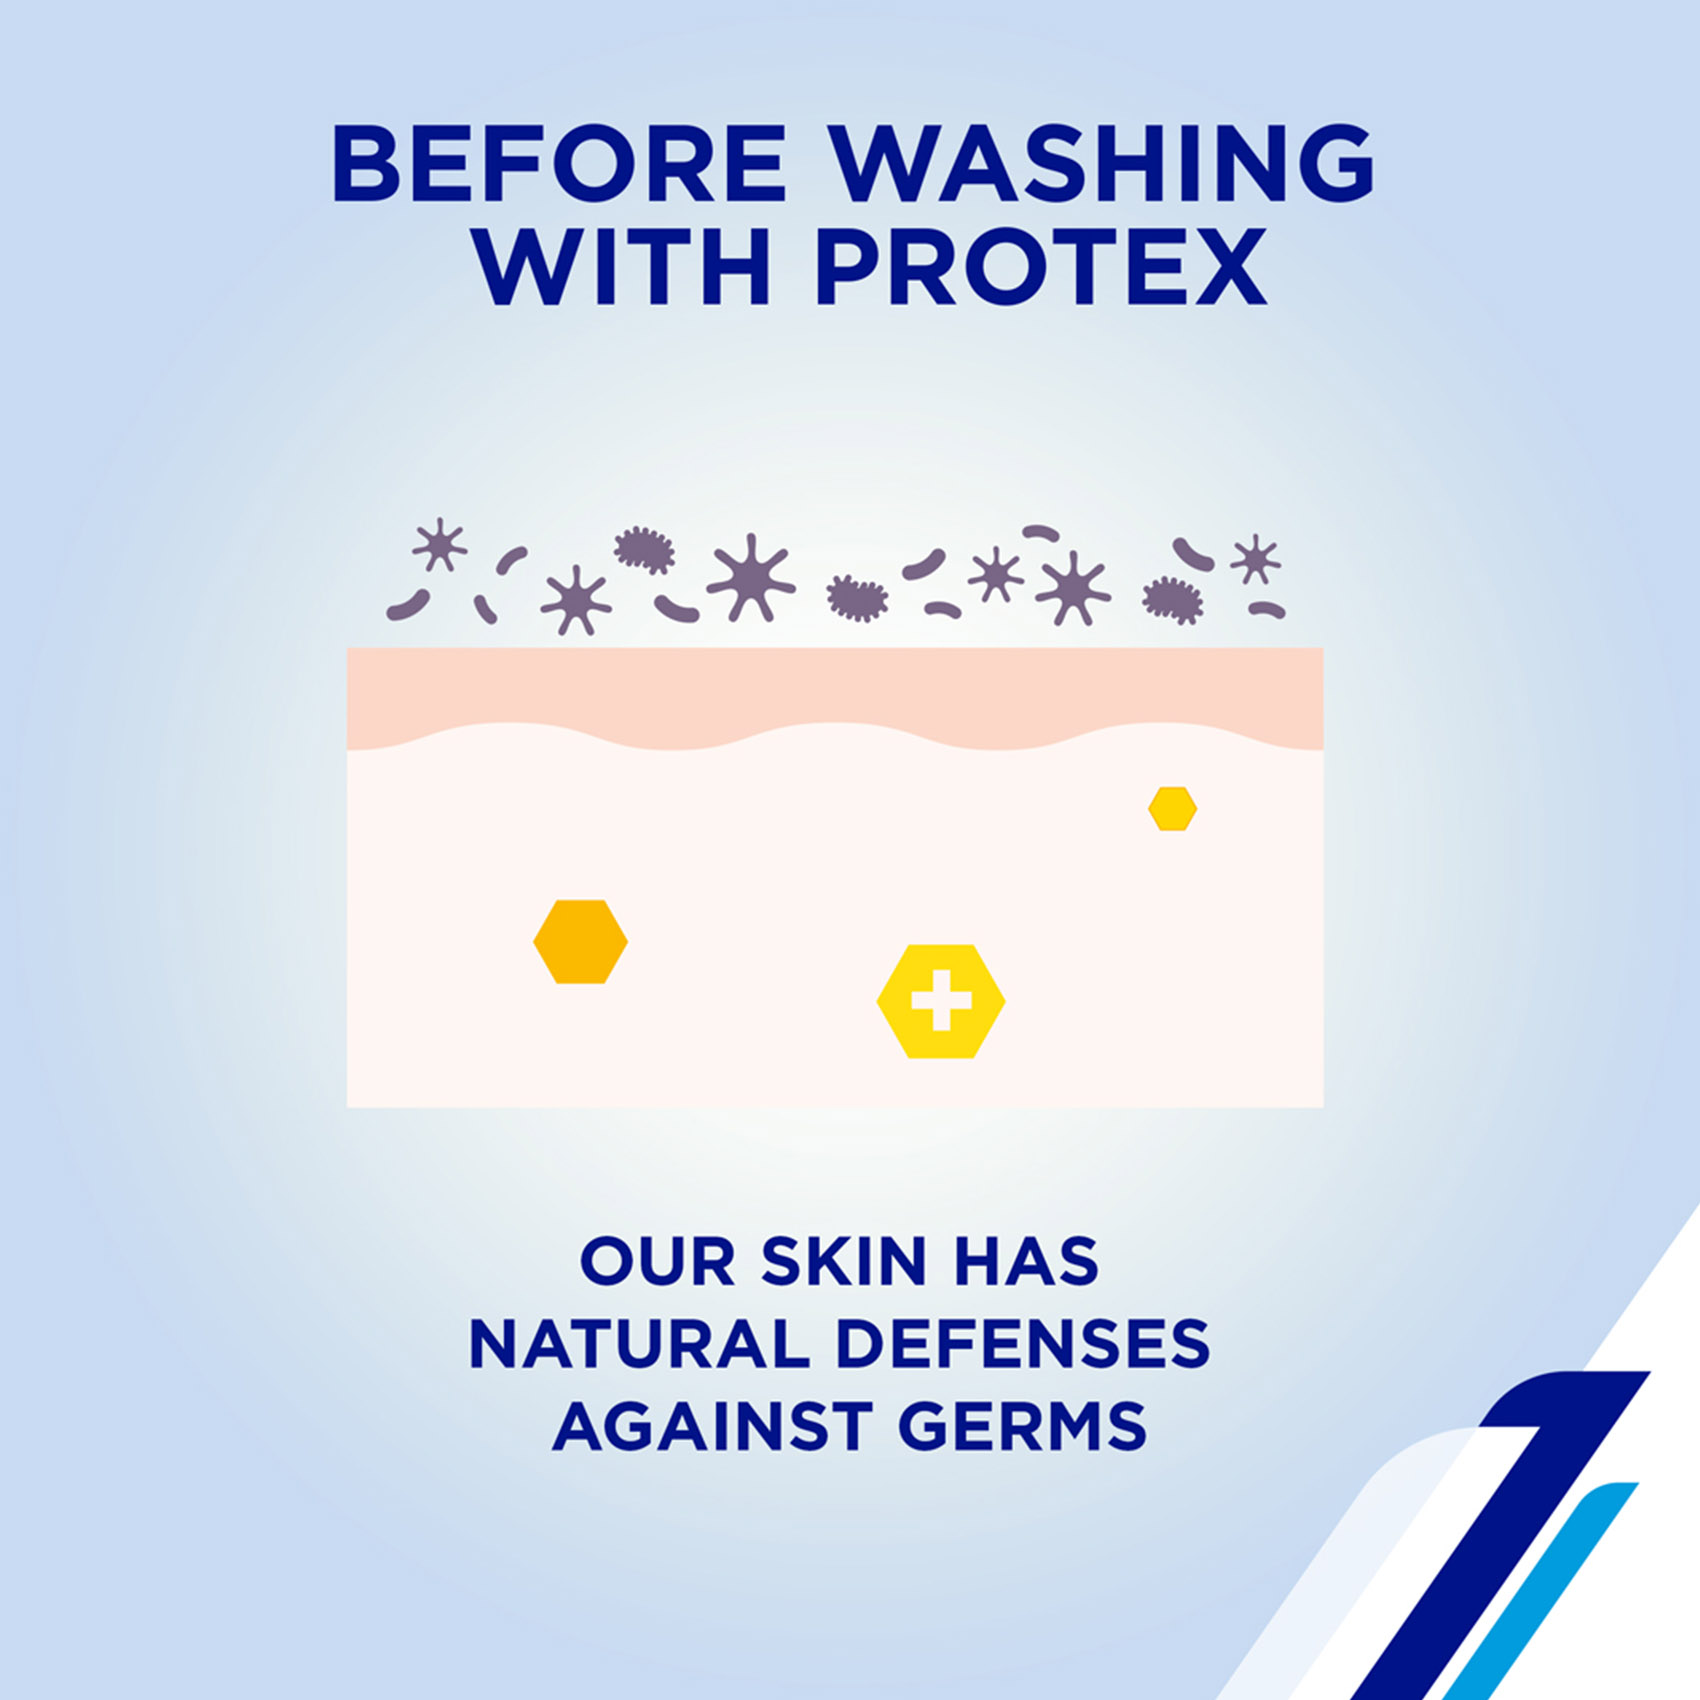 Protex Deep Clean 4x90g Value Pack Antibacterial Soap